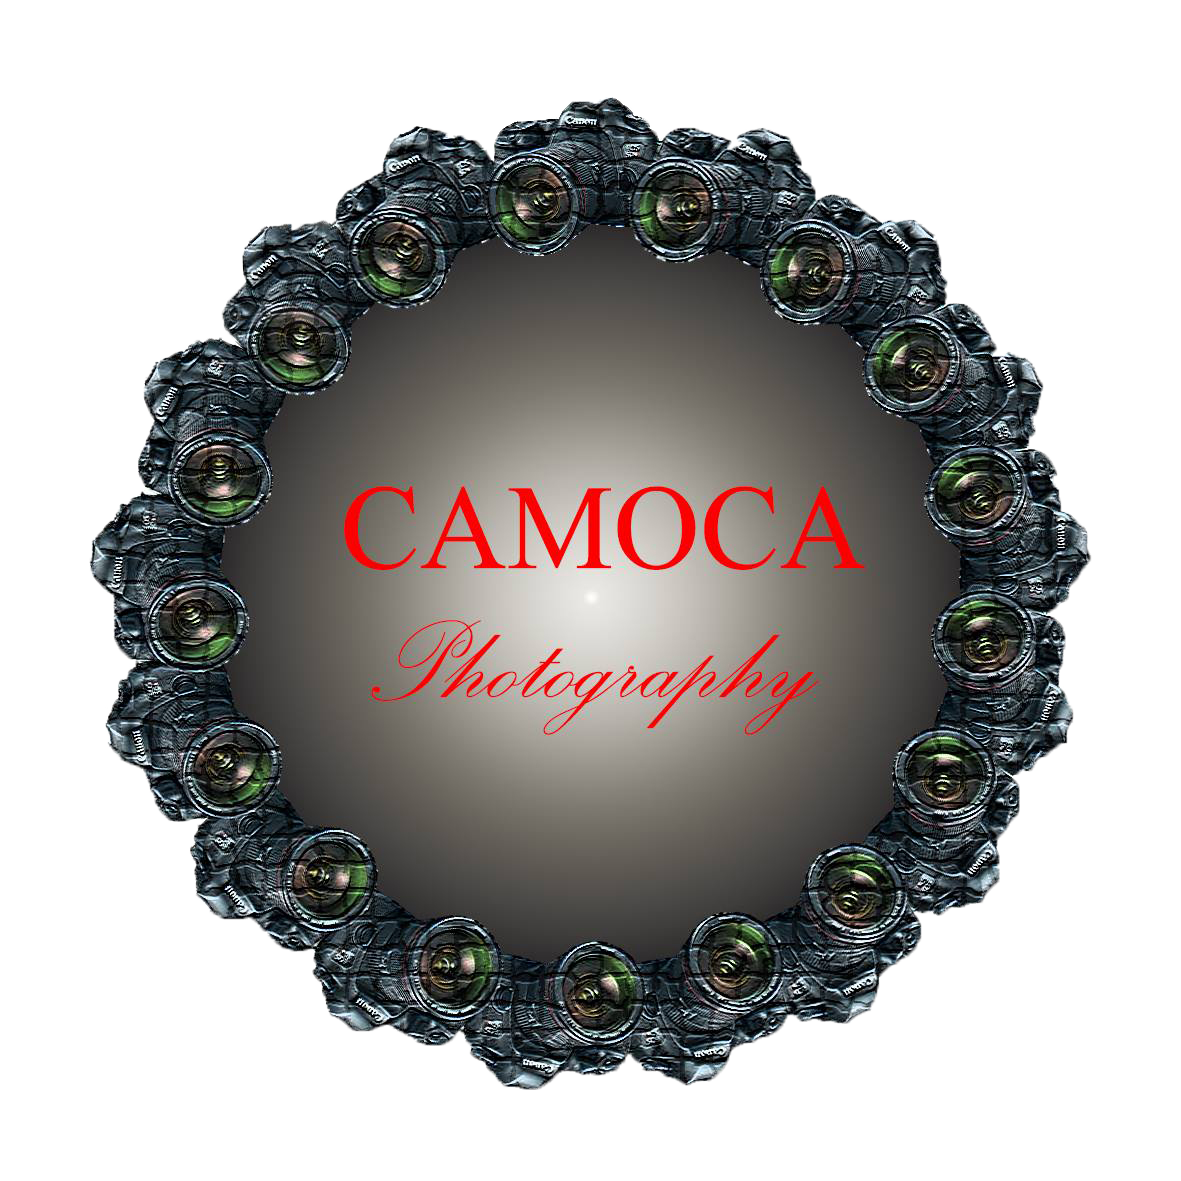 CAMOCA PHOTOGRAPHY